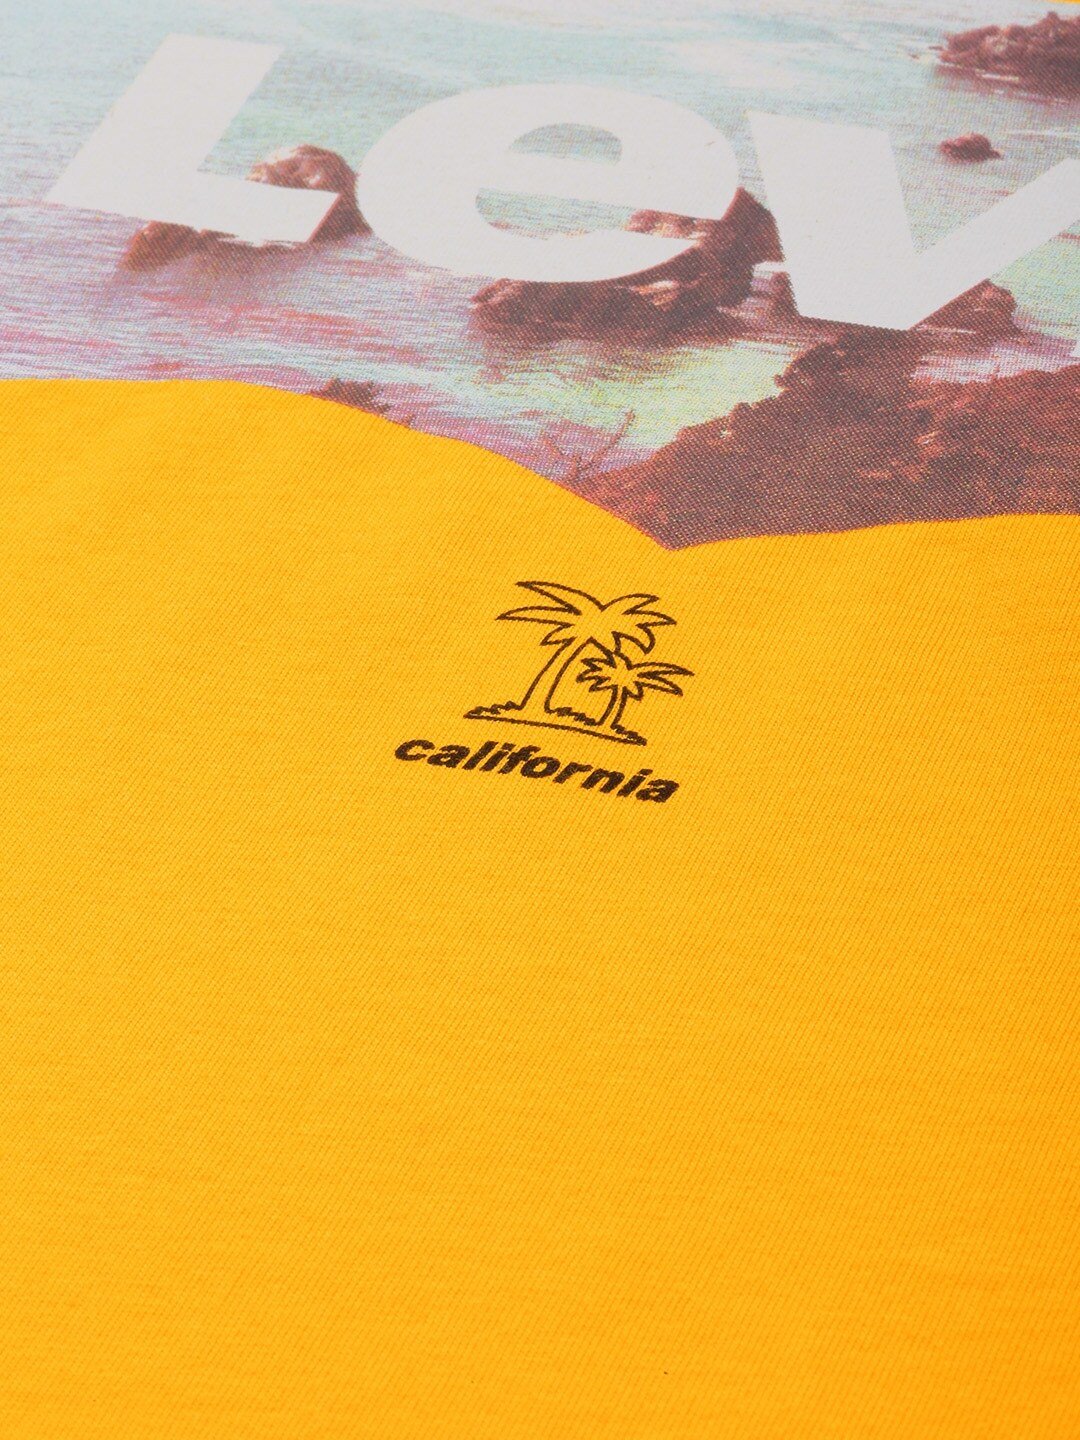 Men Yellow Printed T-shirt-16960-0689